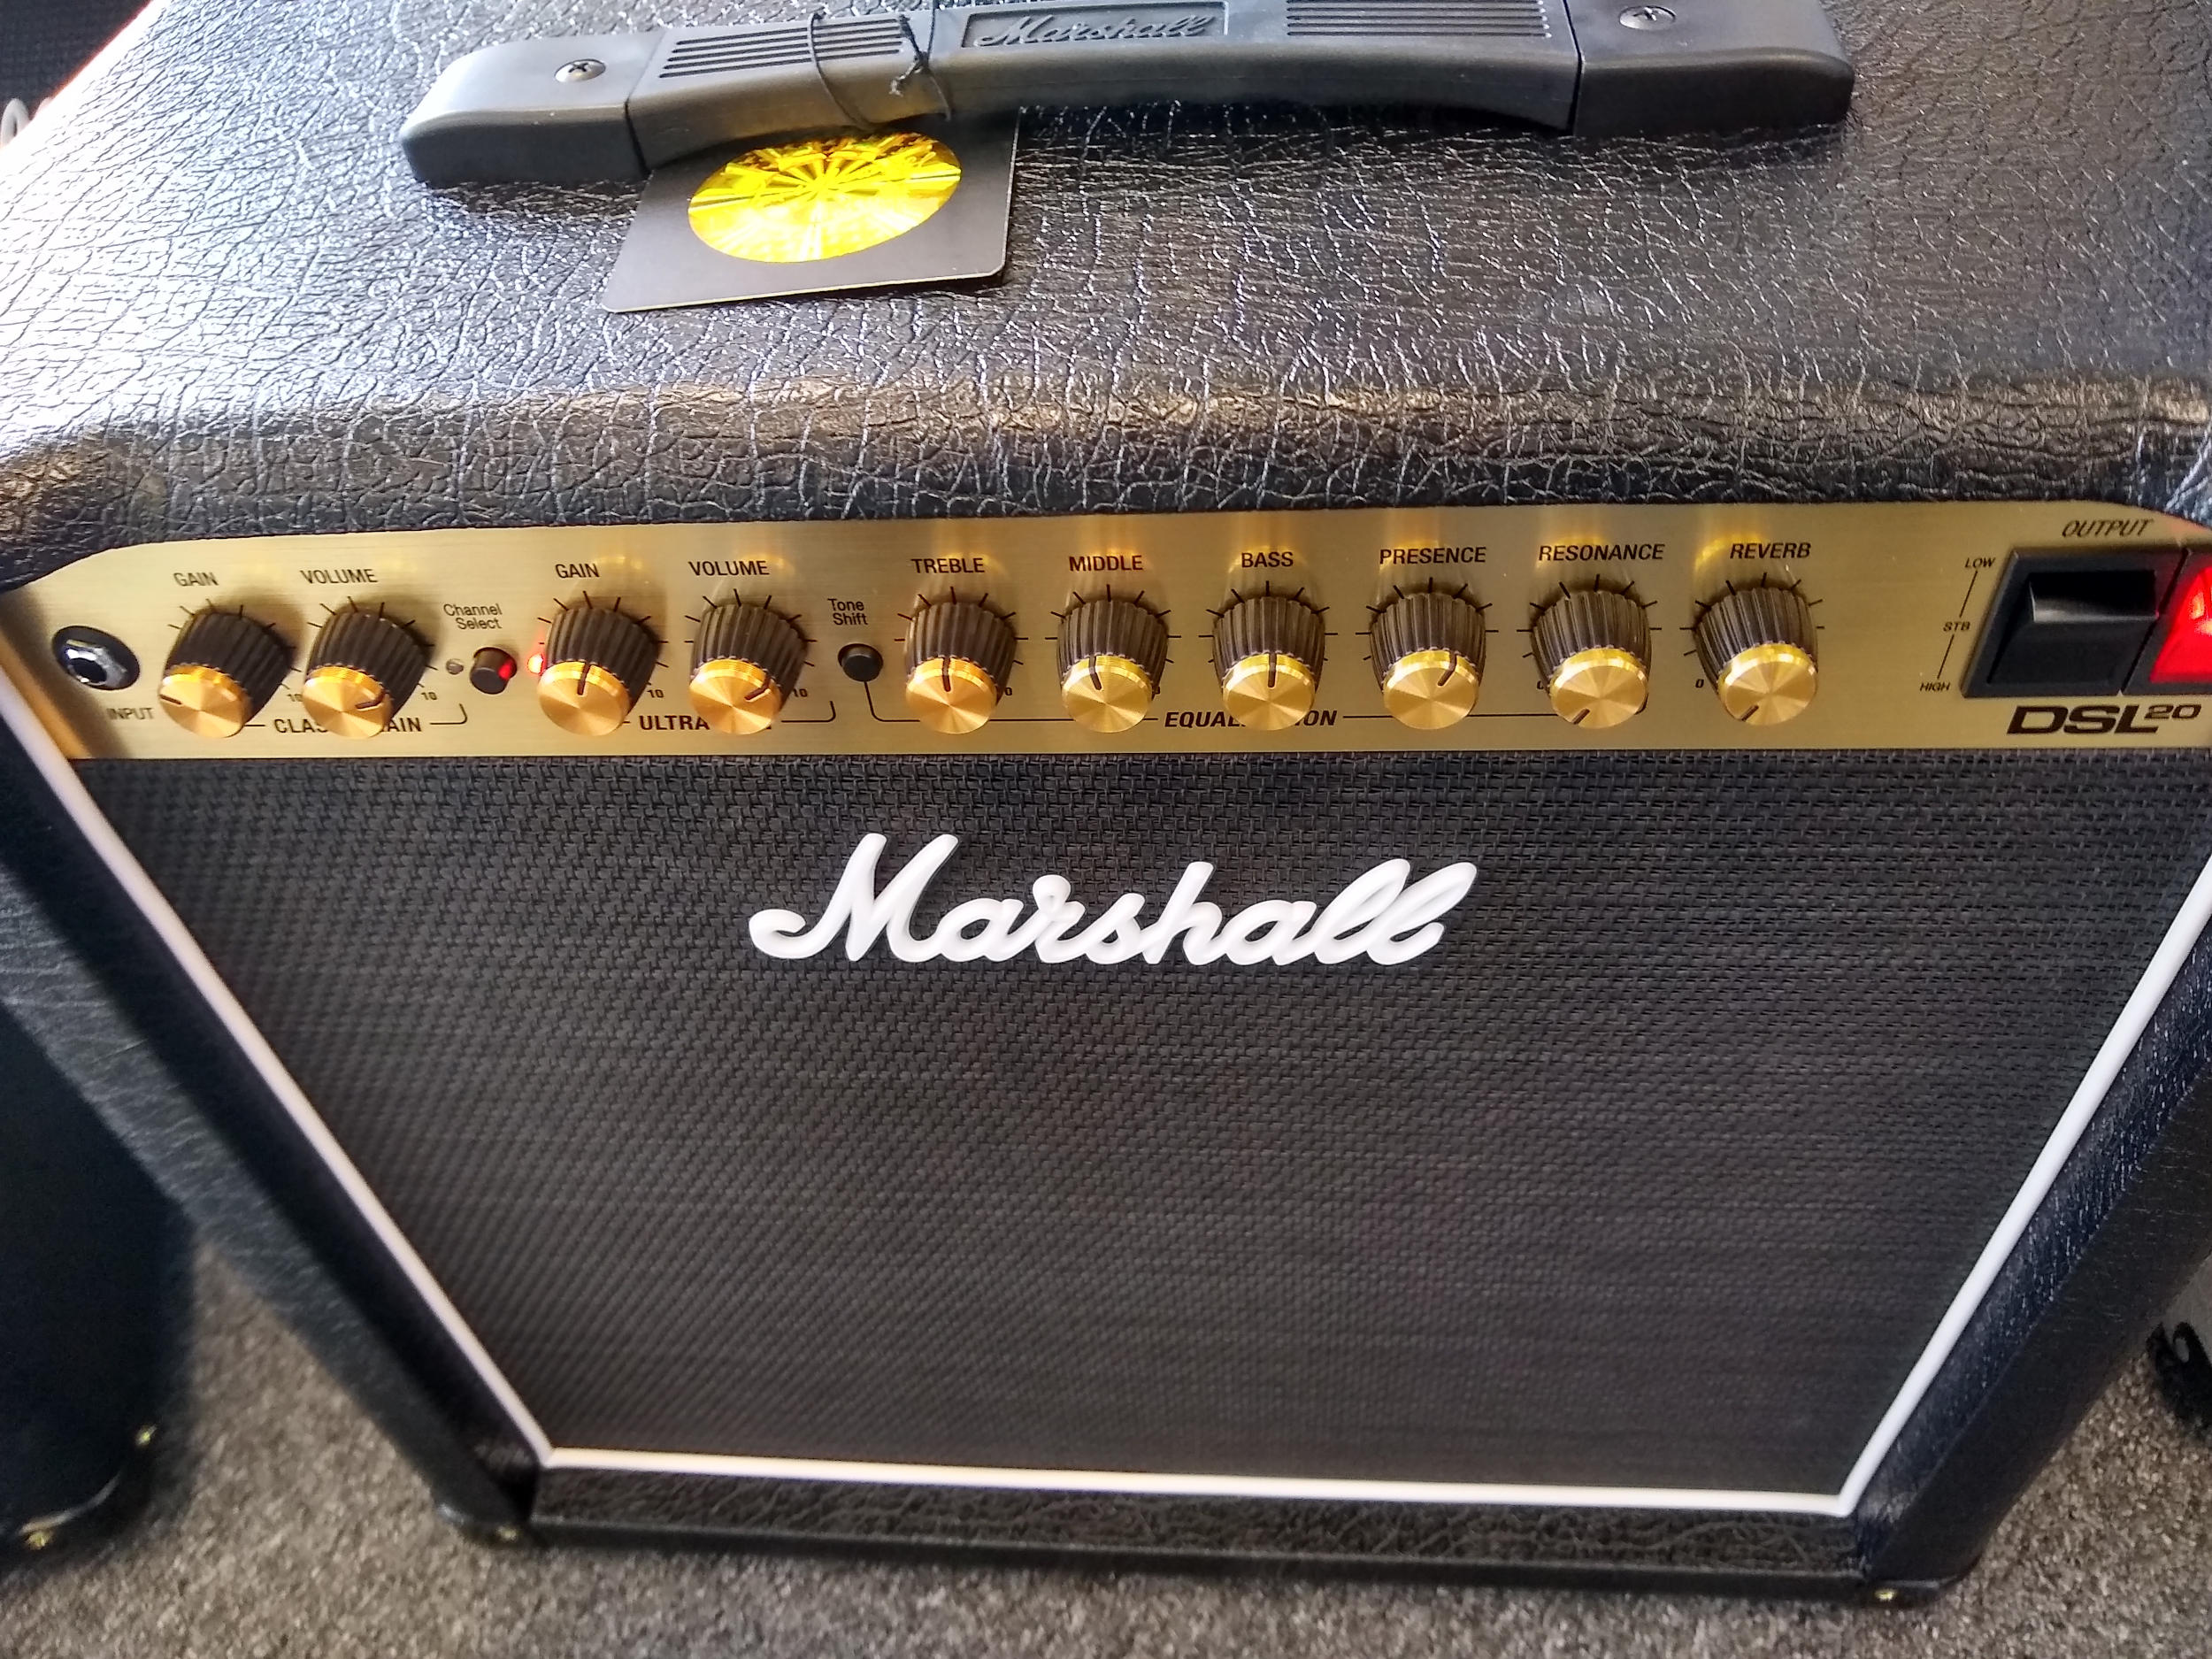 Marshall DSL20 Combo Amplifier